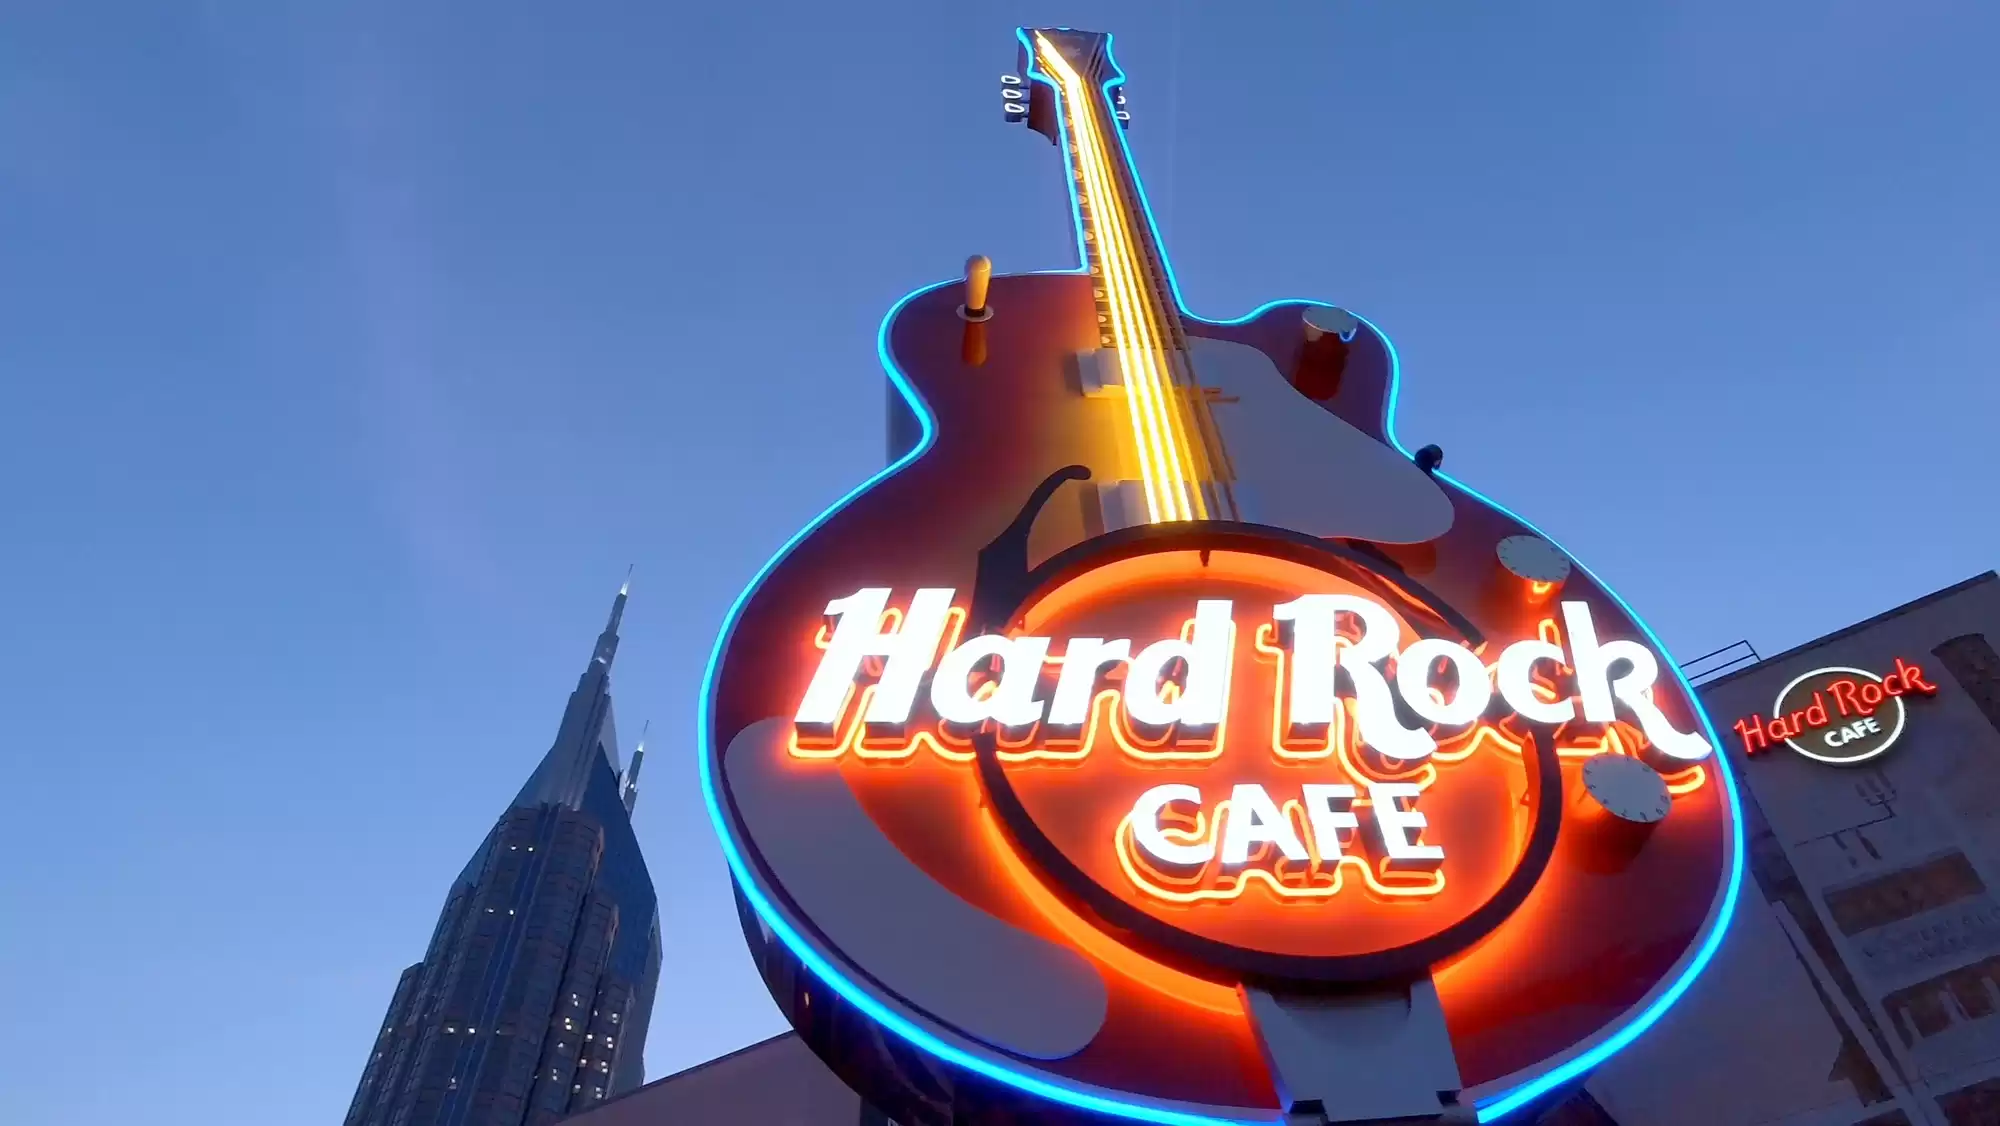 Hard Rock Cafe anuncia a abertura de mais de 100 vagas de emprego para nova unidade de Florianópolis